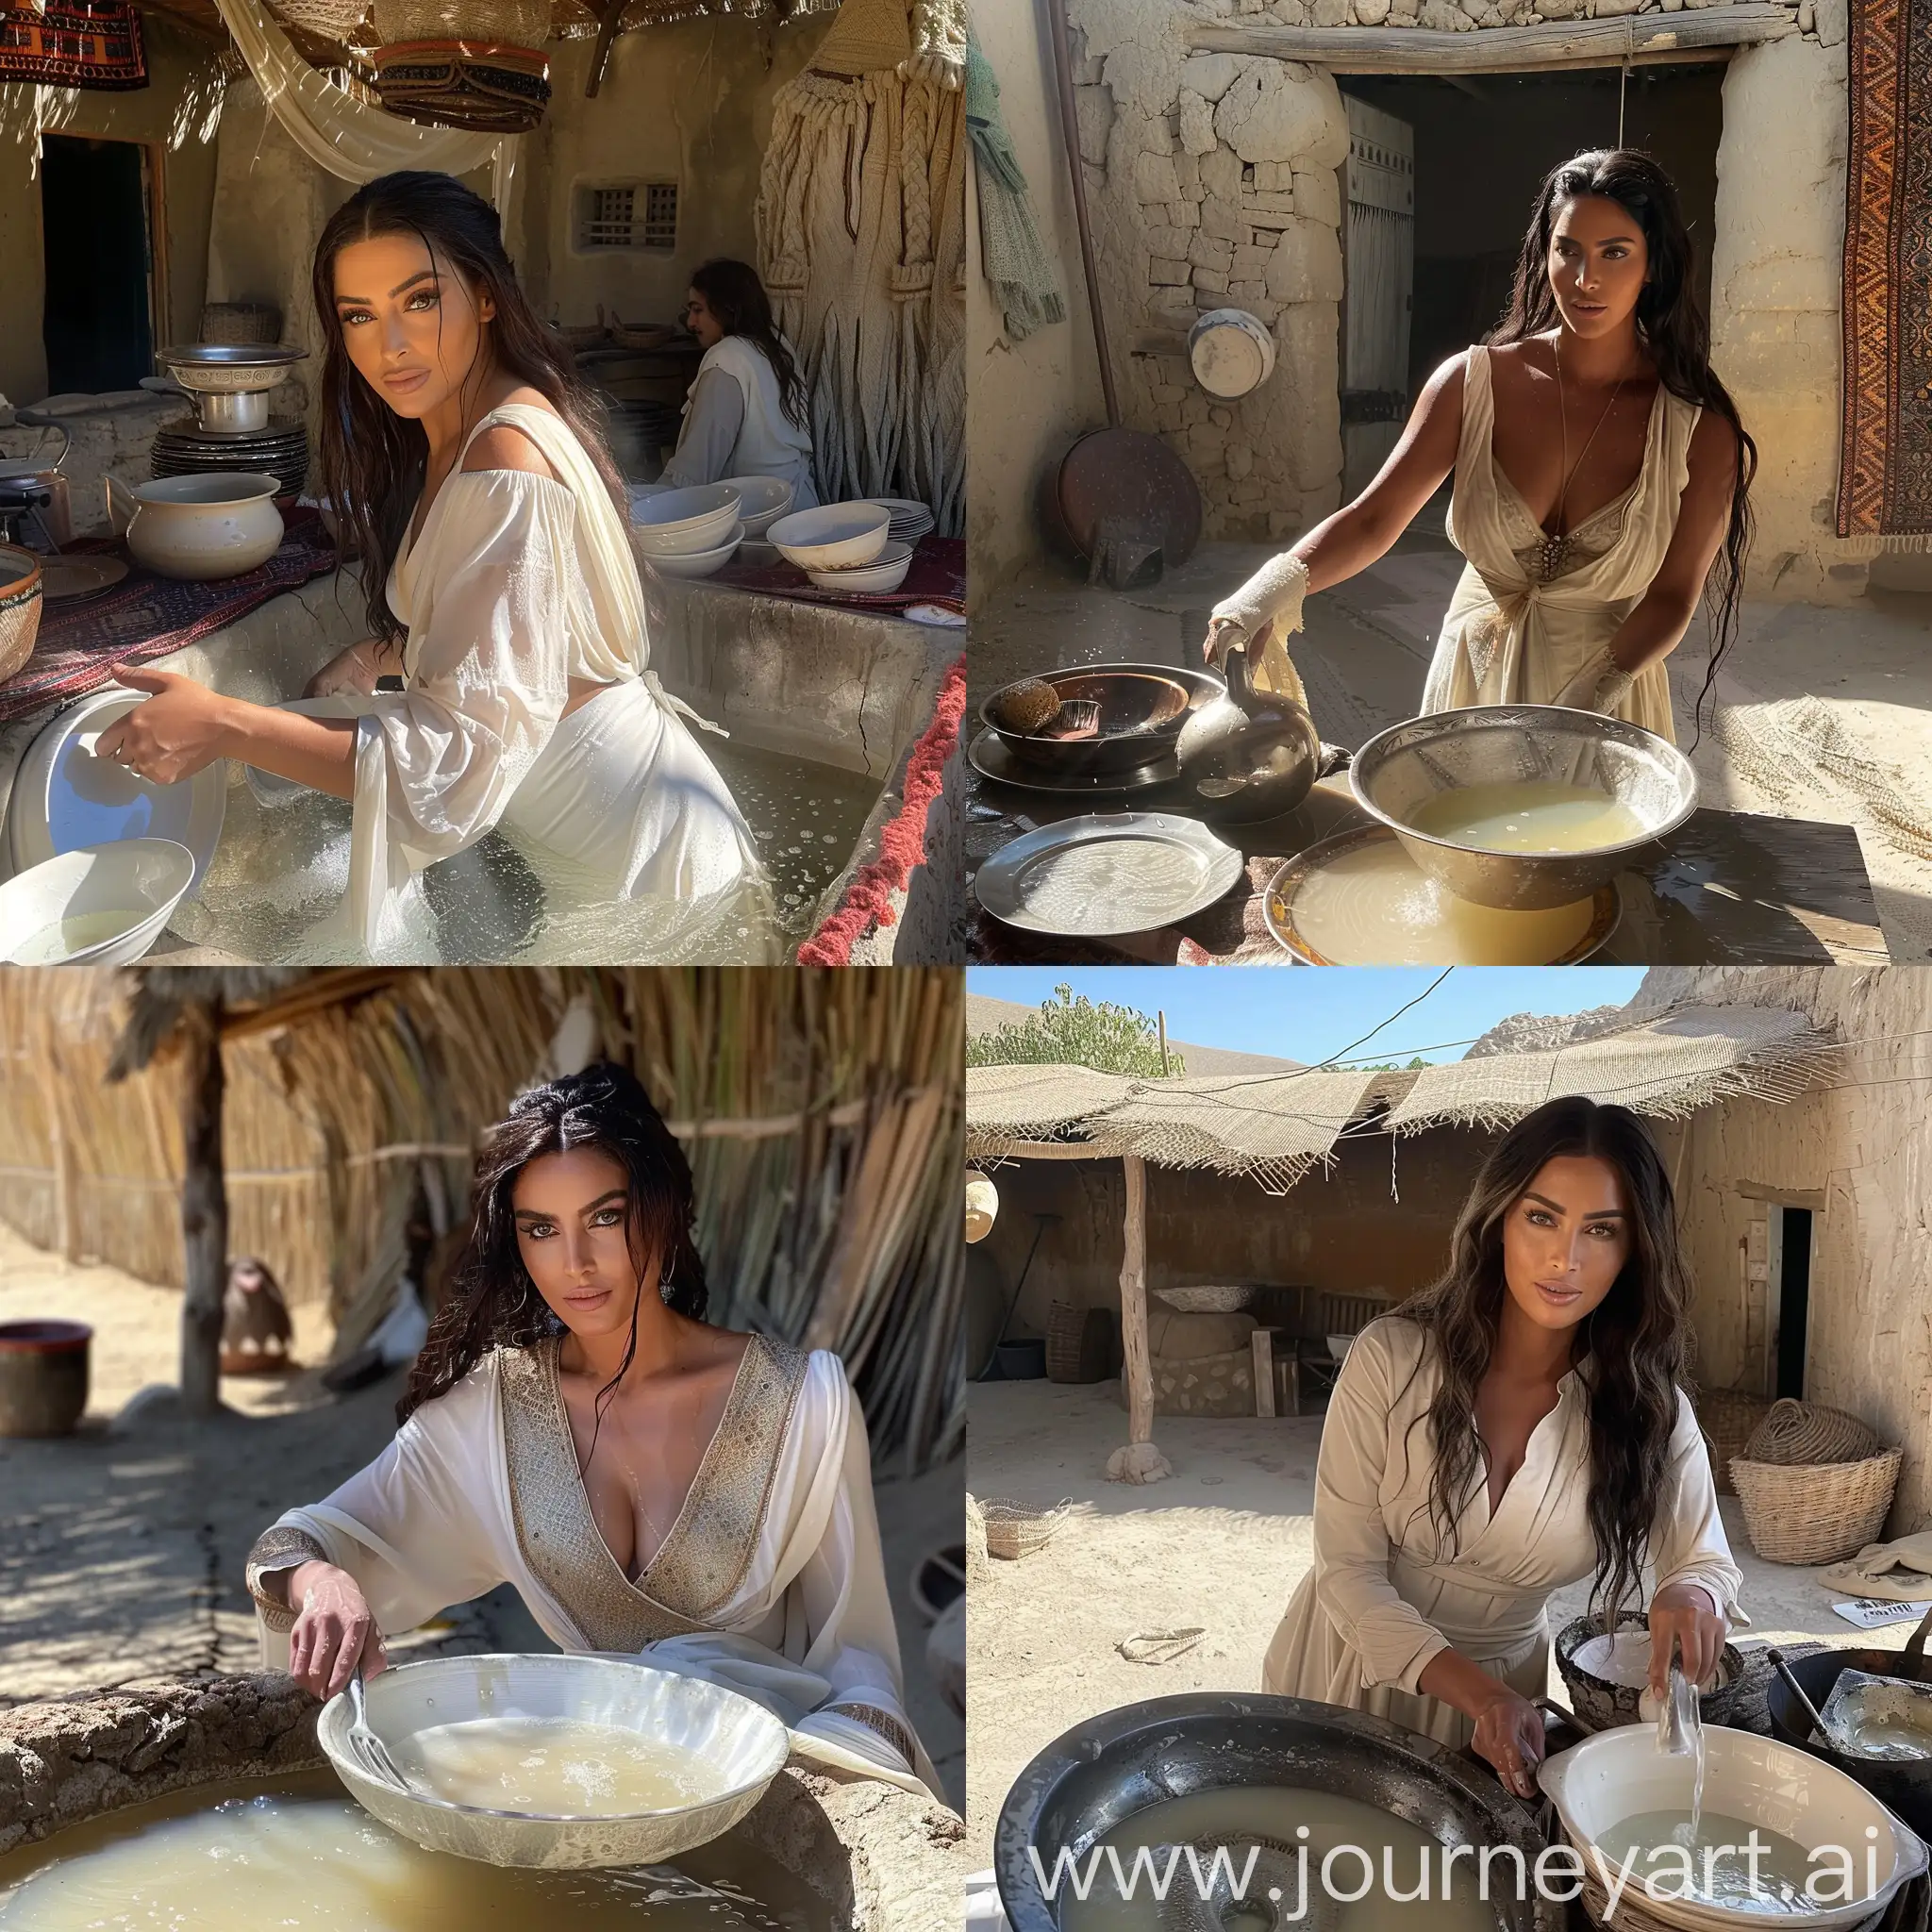 Kim-Kardashian-Washing-Dishes-in-an-Iranian-Village